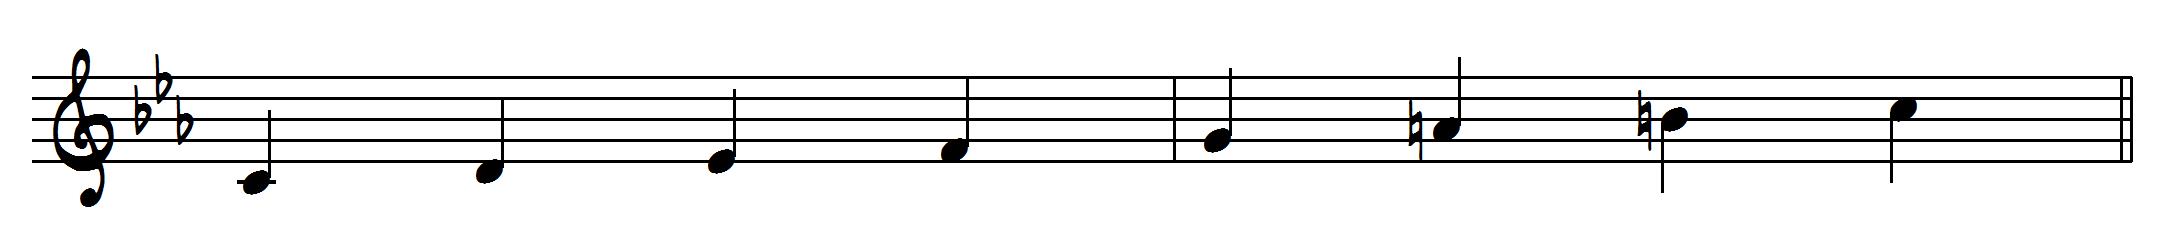 c-melodic-minor